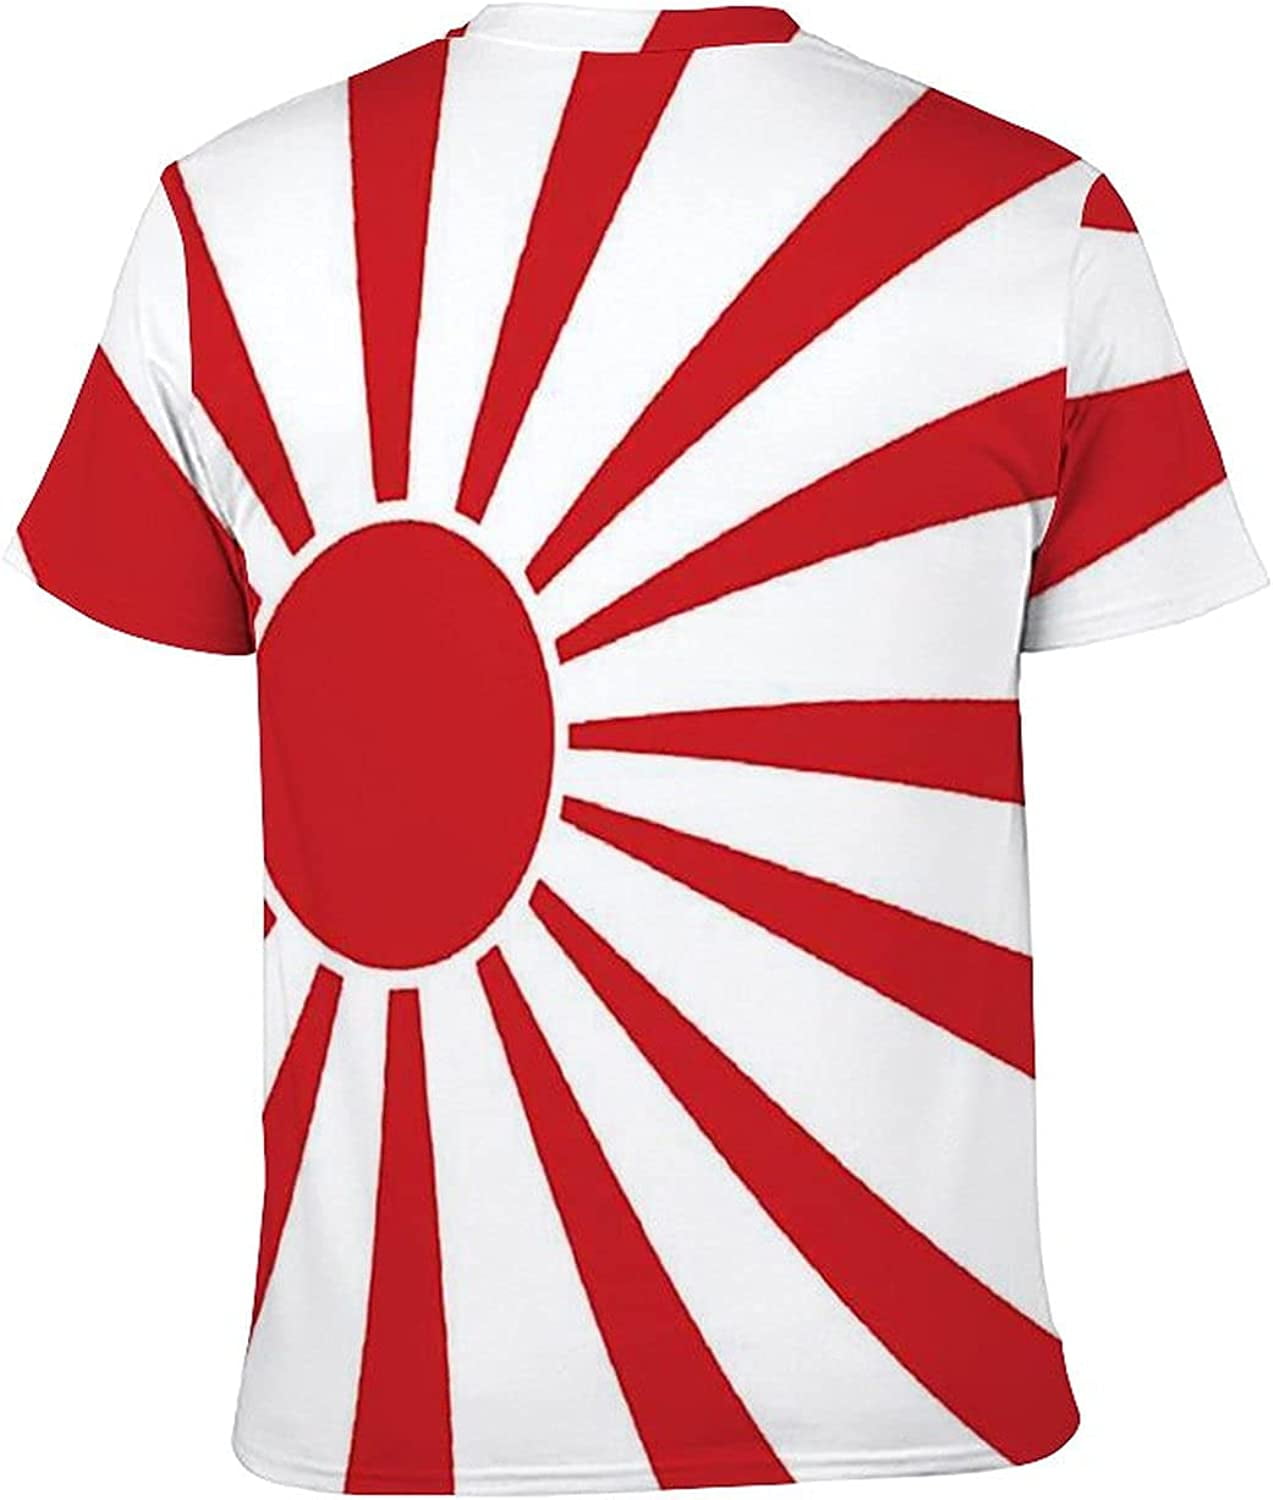 Japanese T-Shirt Brands 'Uprising